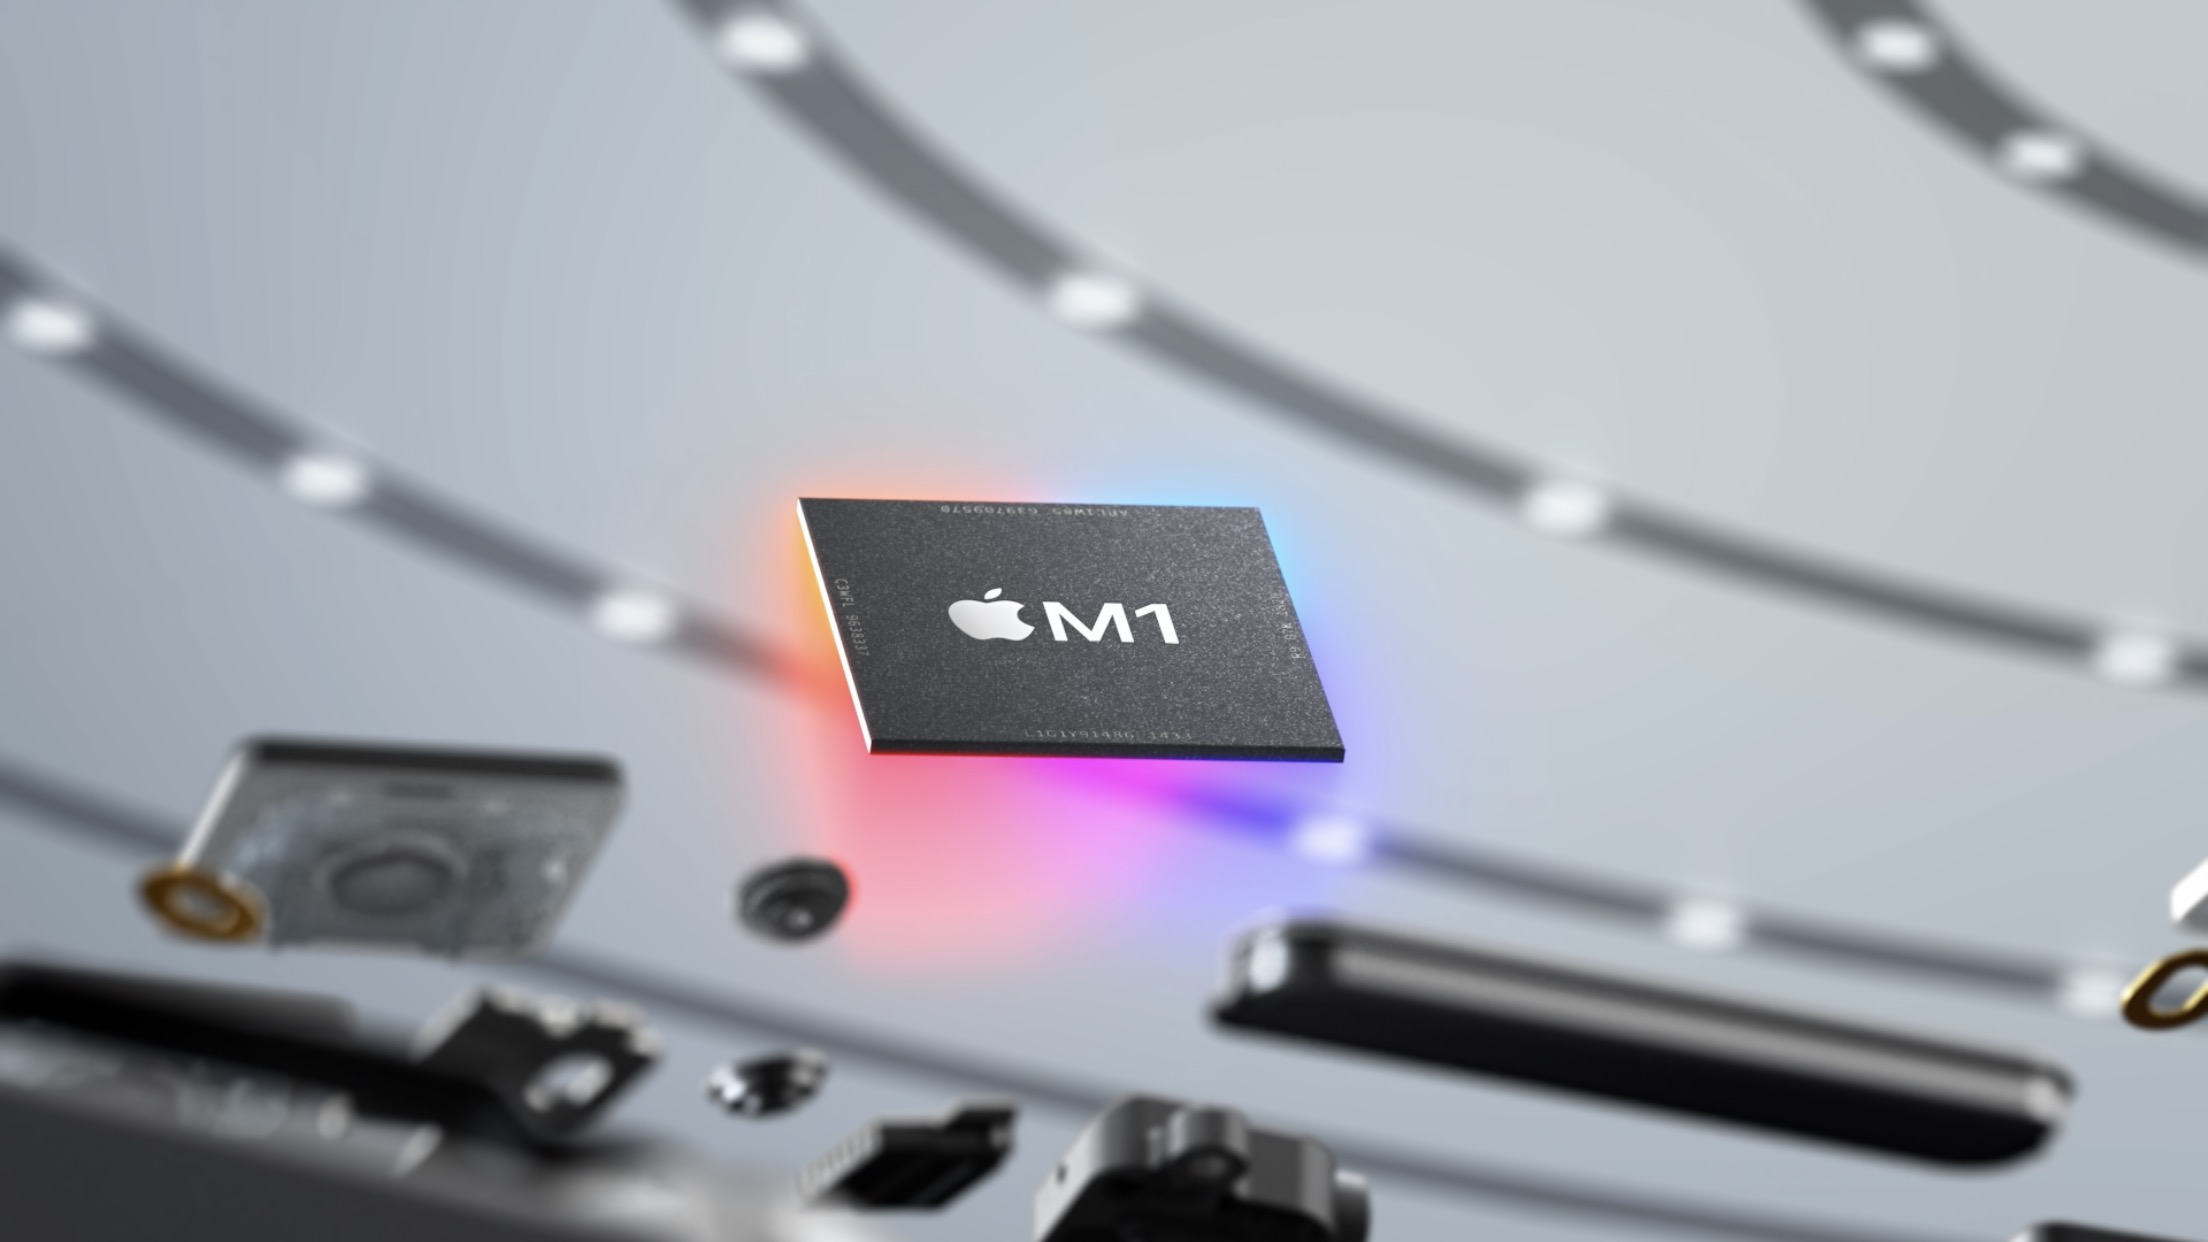 iPhoneアプリも動作。M1チップ搭載の新型MacBook／Mac mini登場。価格は7万円から